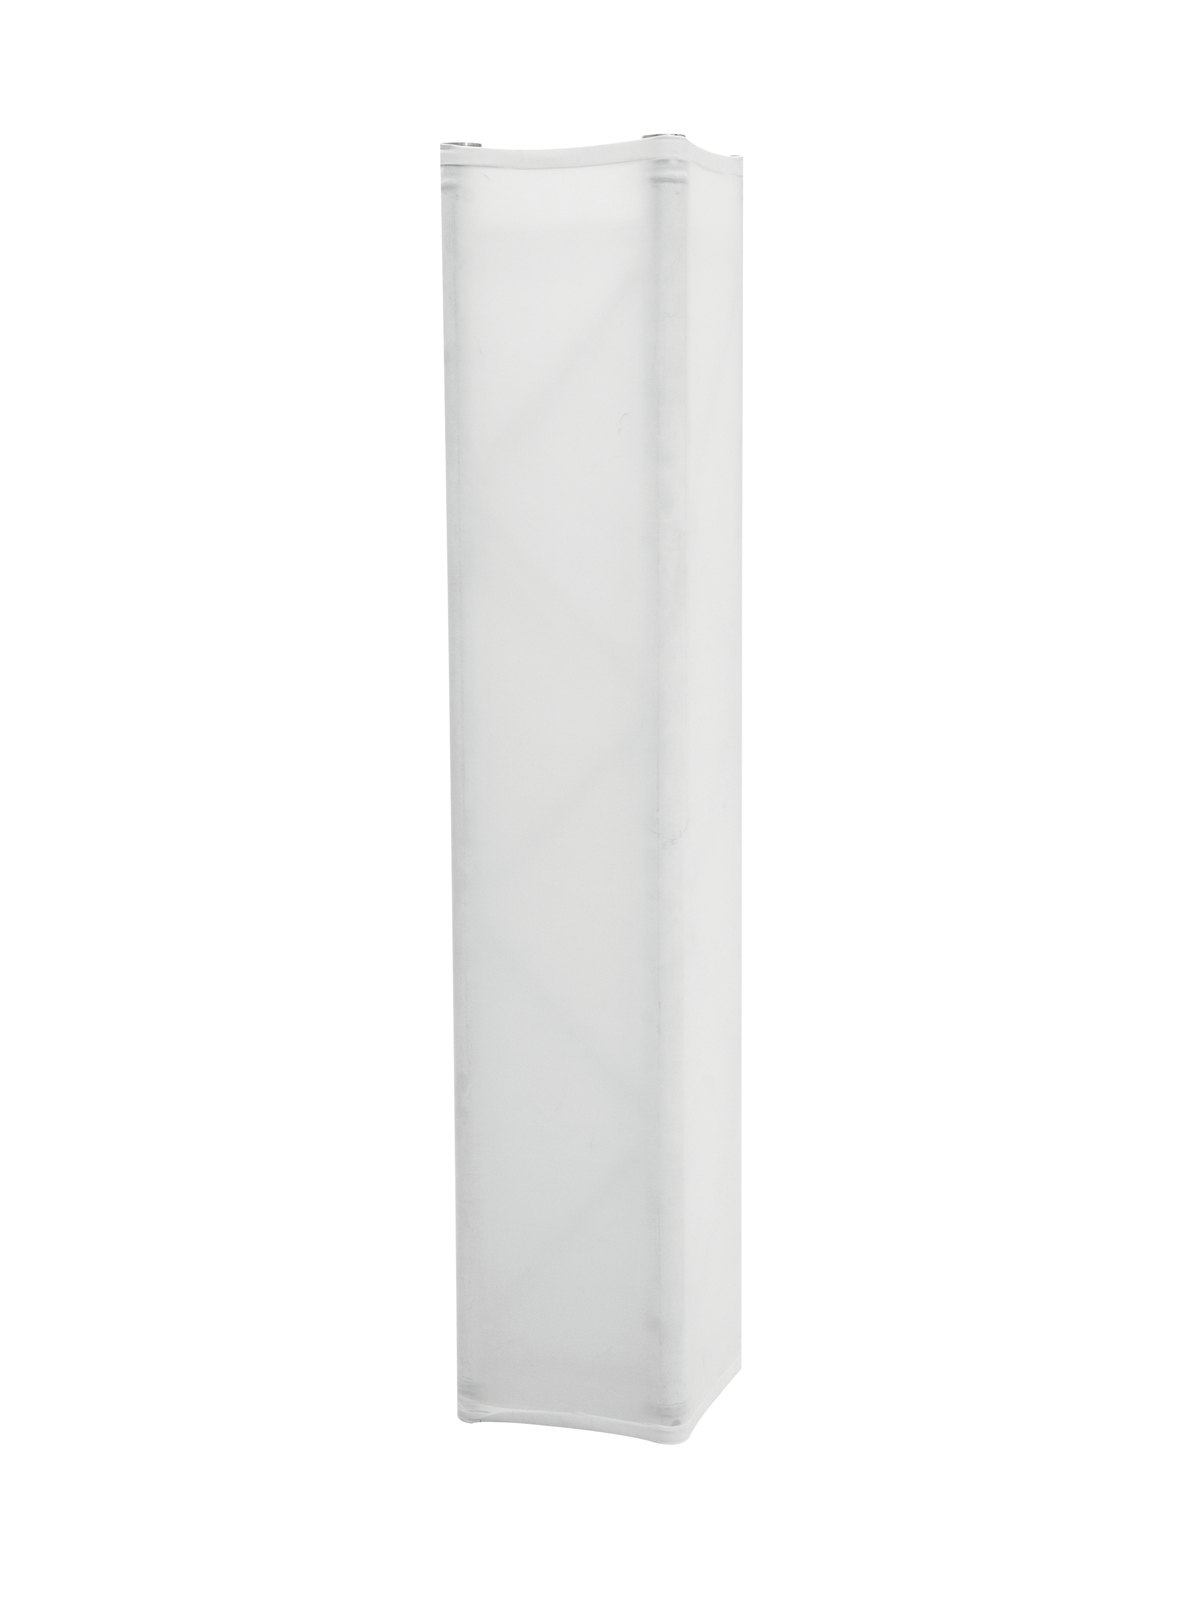 Kryt elastický pro konstrukci 150cm, bílý